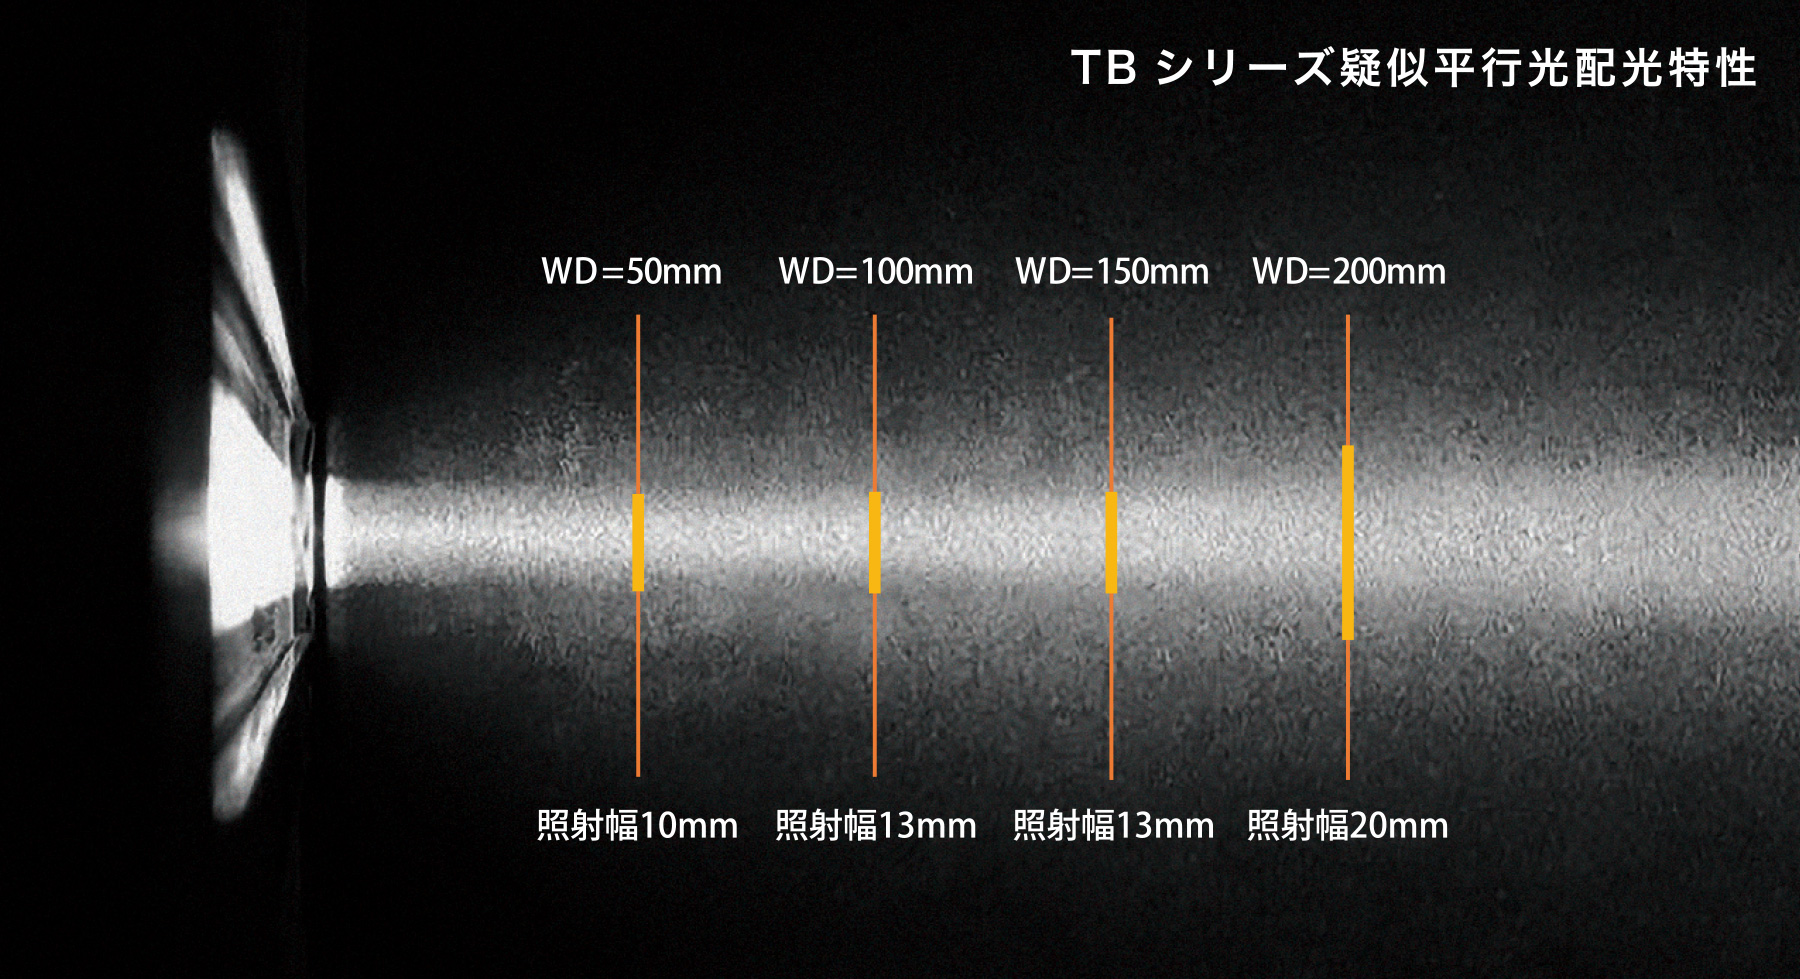 SPX-TB/07/30/70 平行光を意識した光学設計 疑似平行光配光により、長距離での照度アップ